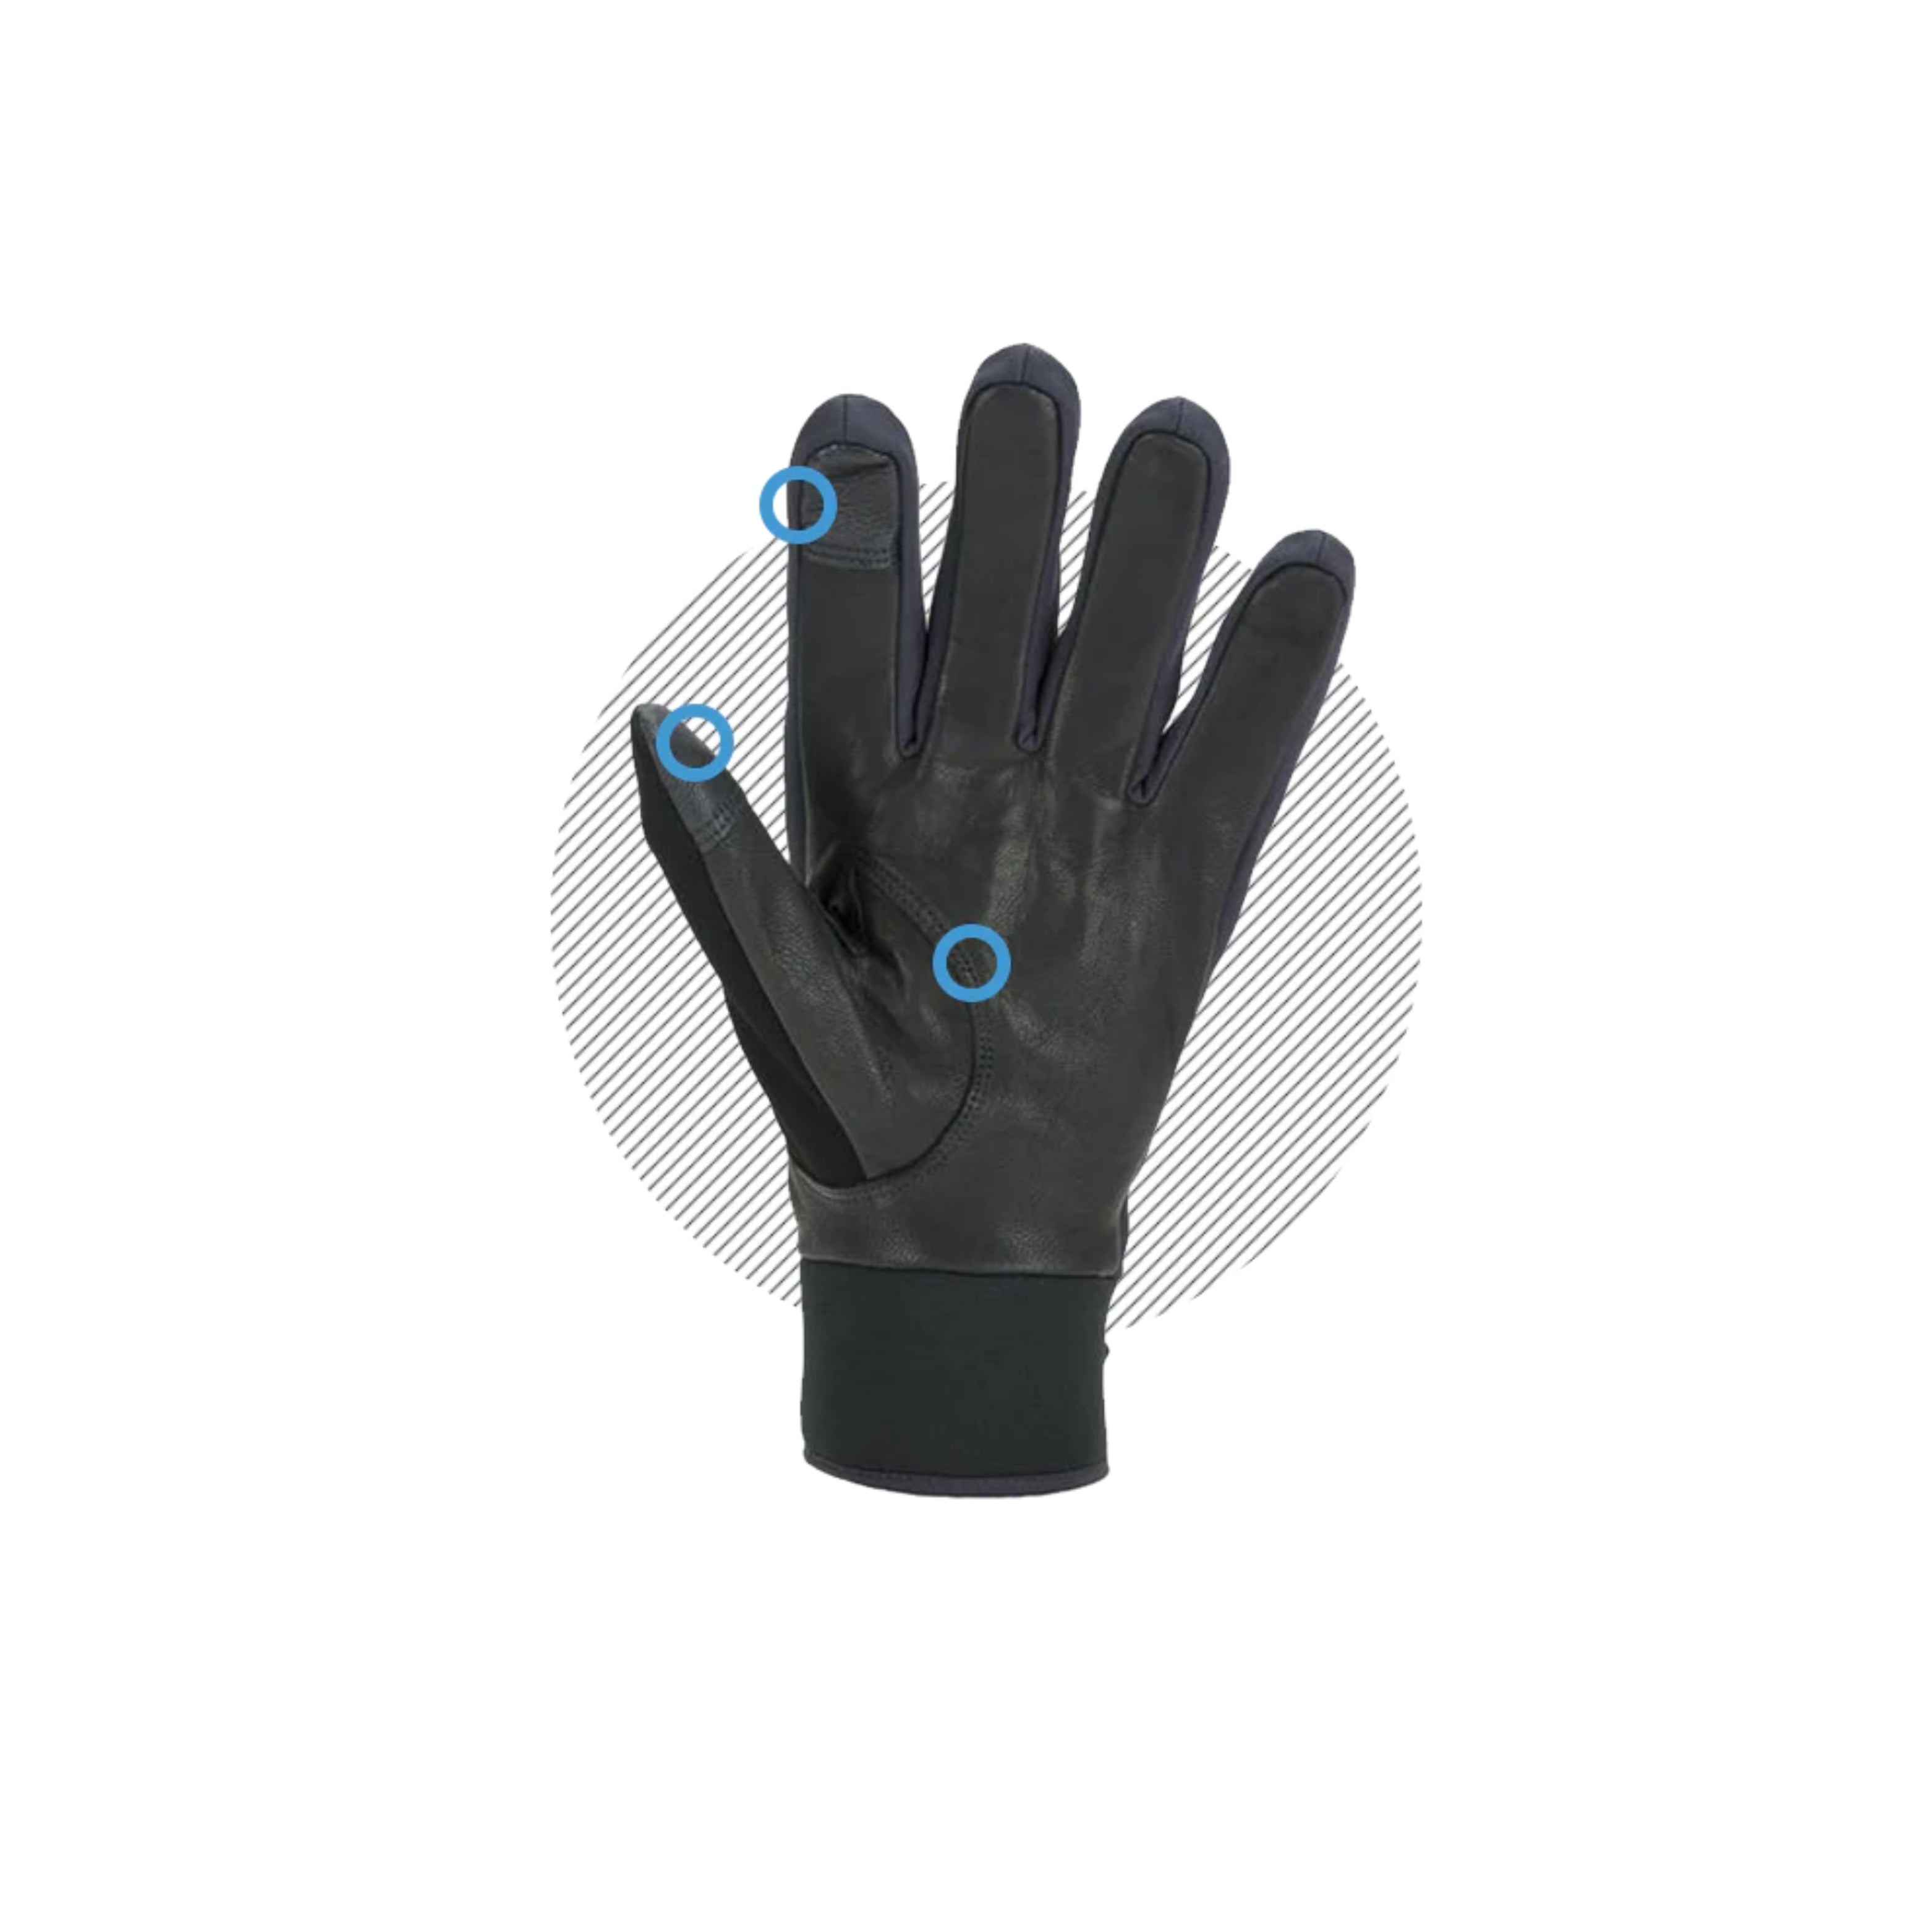 Sealskinz Waterproof Sporting Gloves in Olive & Black